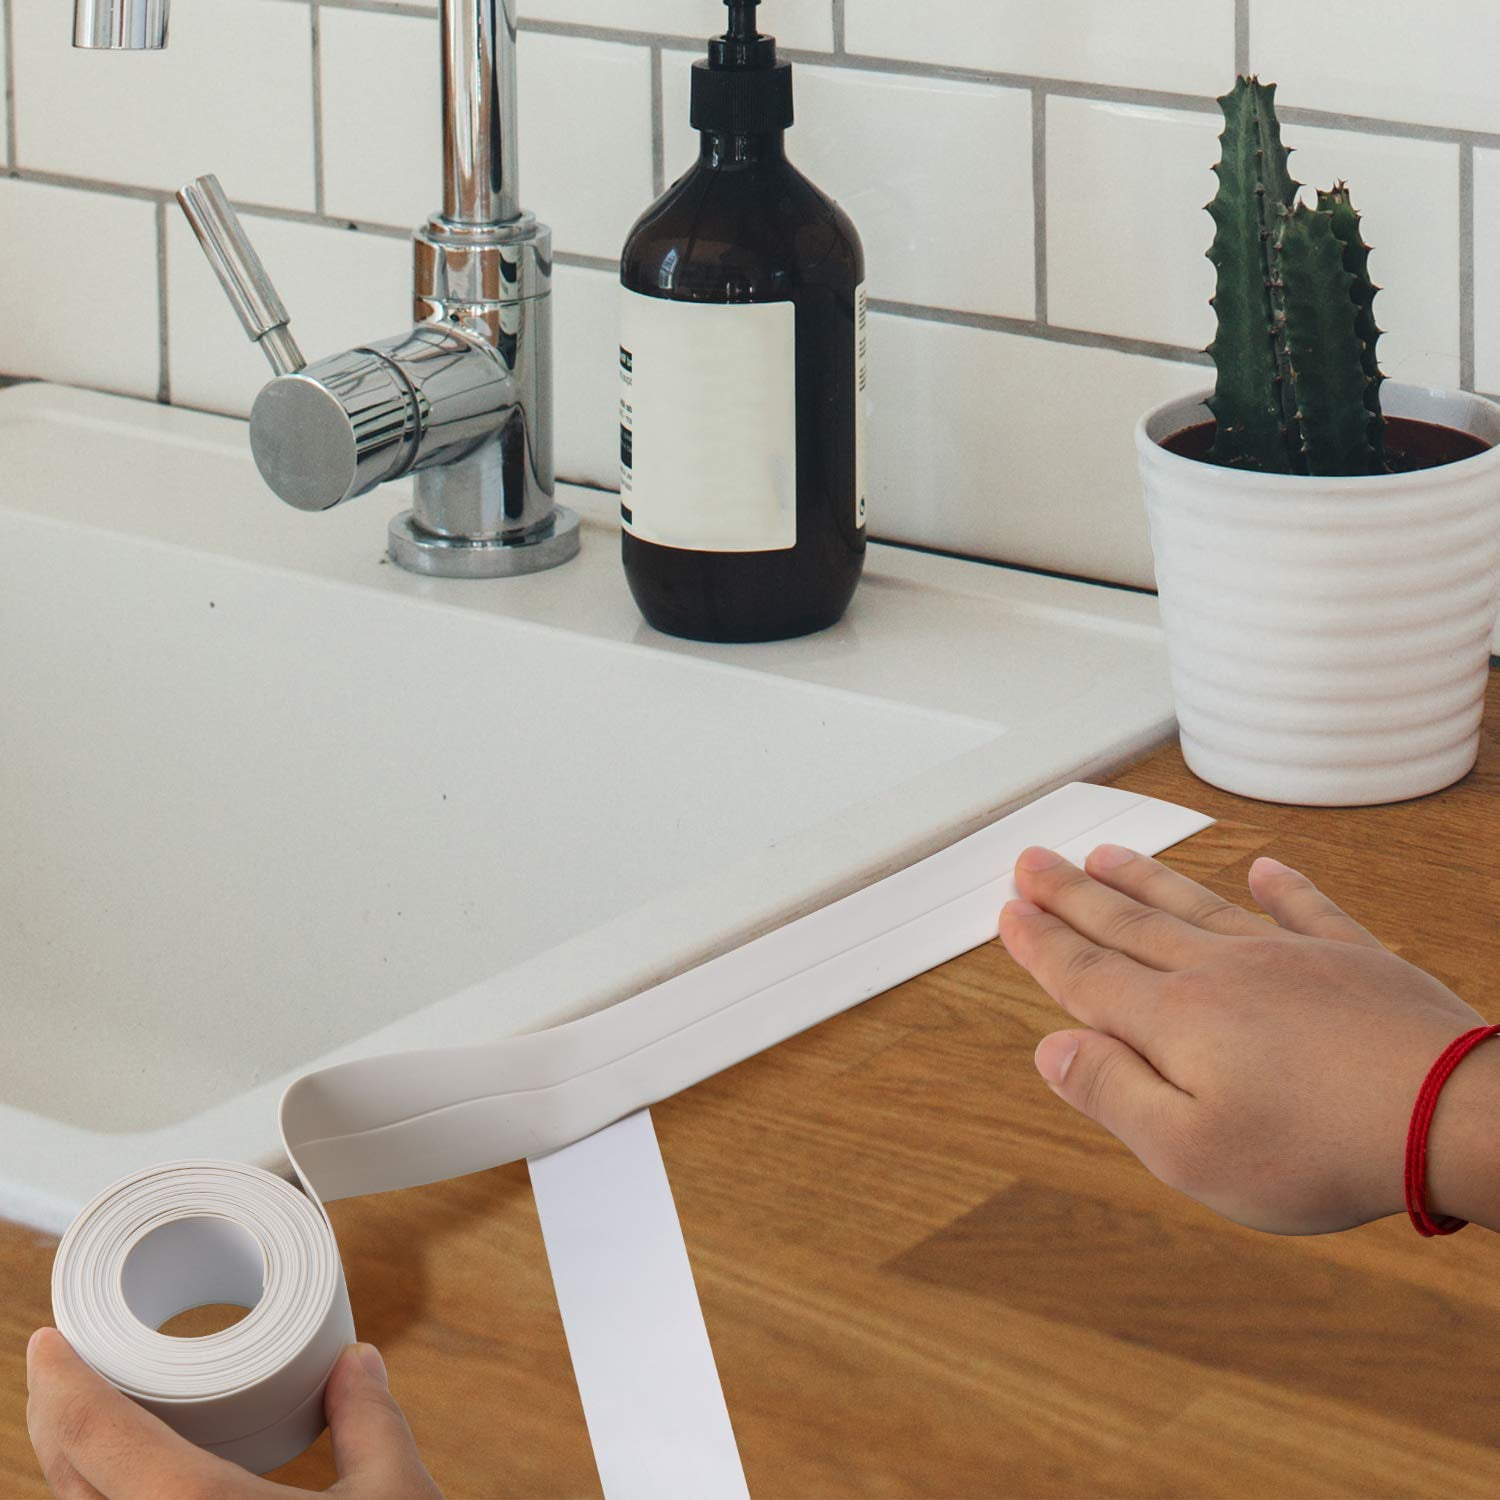 Caulk Strip PMMA Self Adhesive Waterproof Sealing Tape for Bathtub Bathroom Shower Toilet Kitchen and Wall Caulk Tape (59/50 inch Width x 33Feet